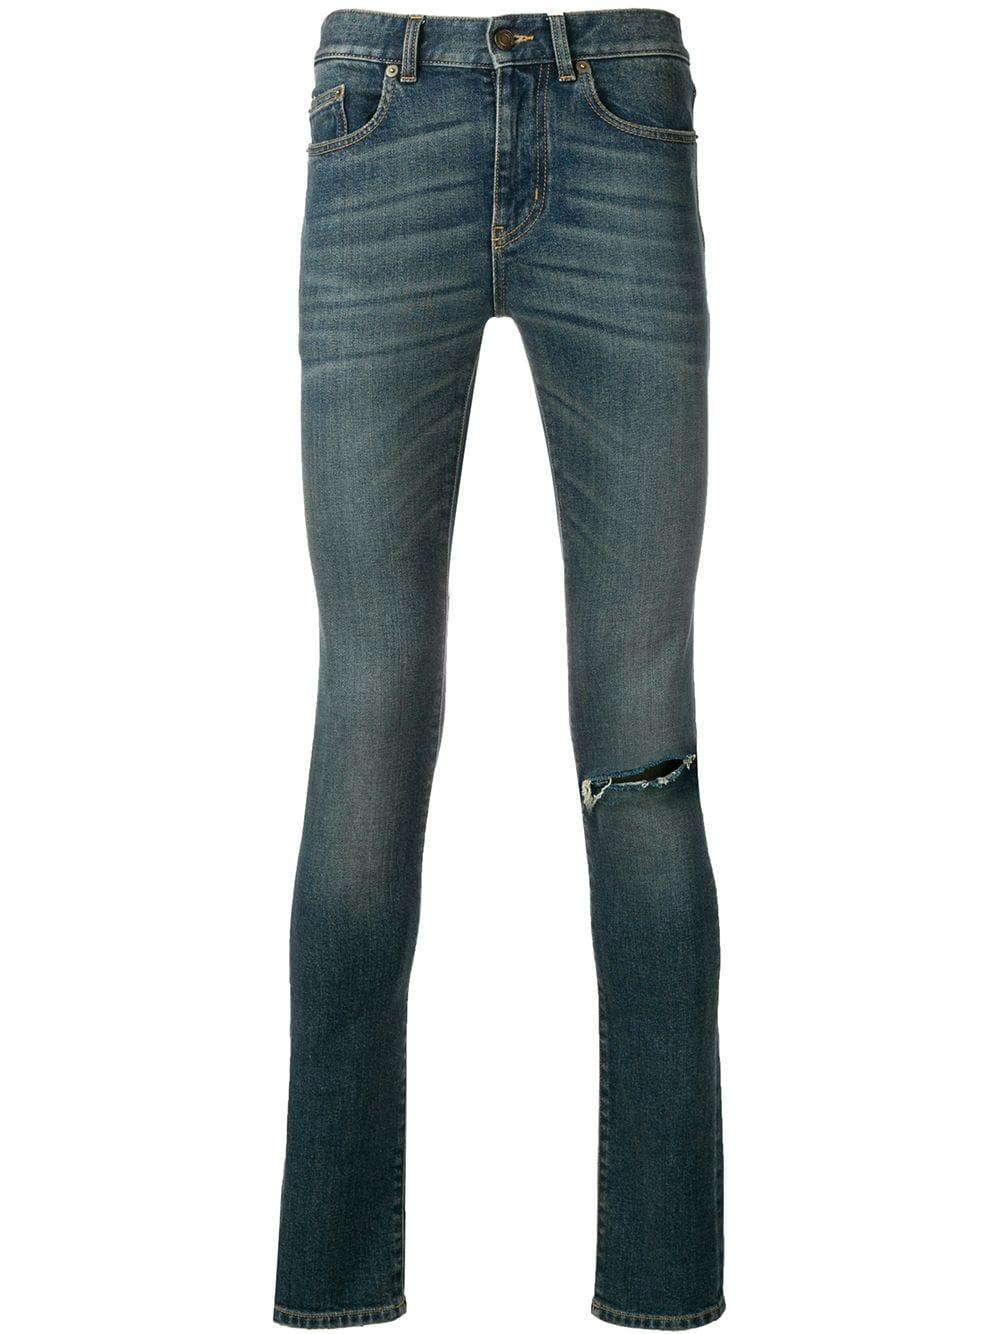 Saint Laurent Skinny Ripped Jeans in Blue for Men - Lyst